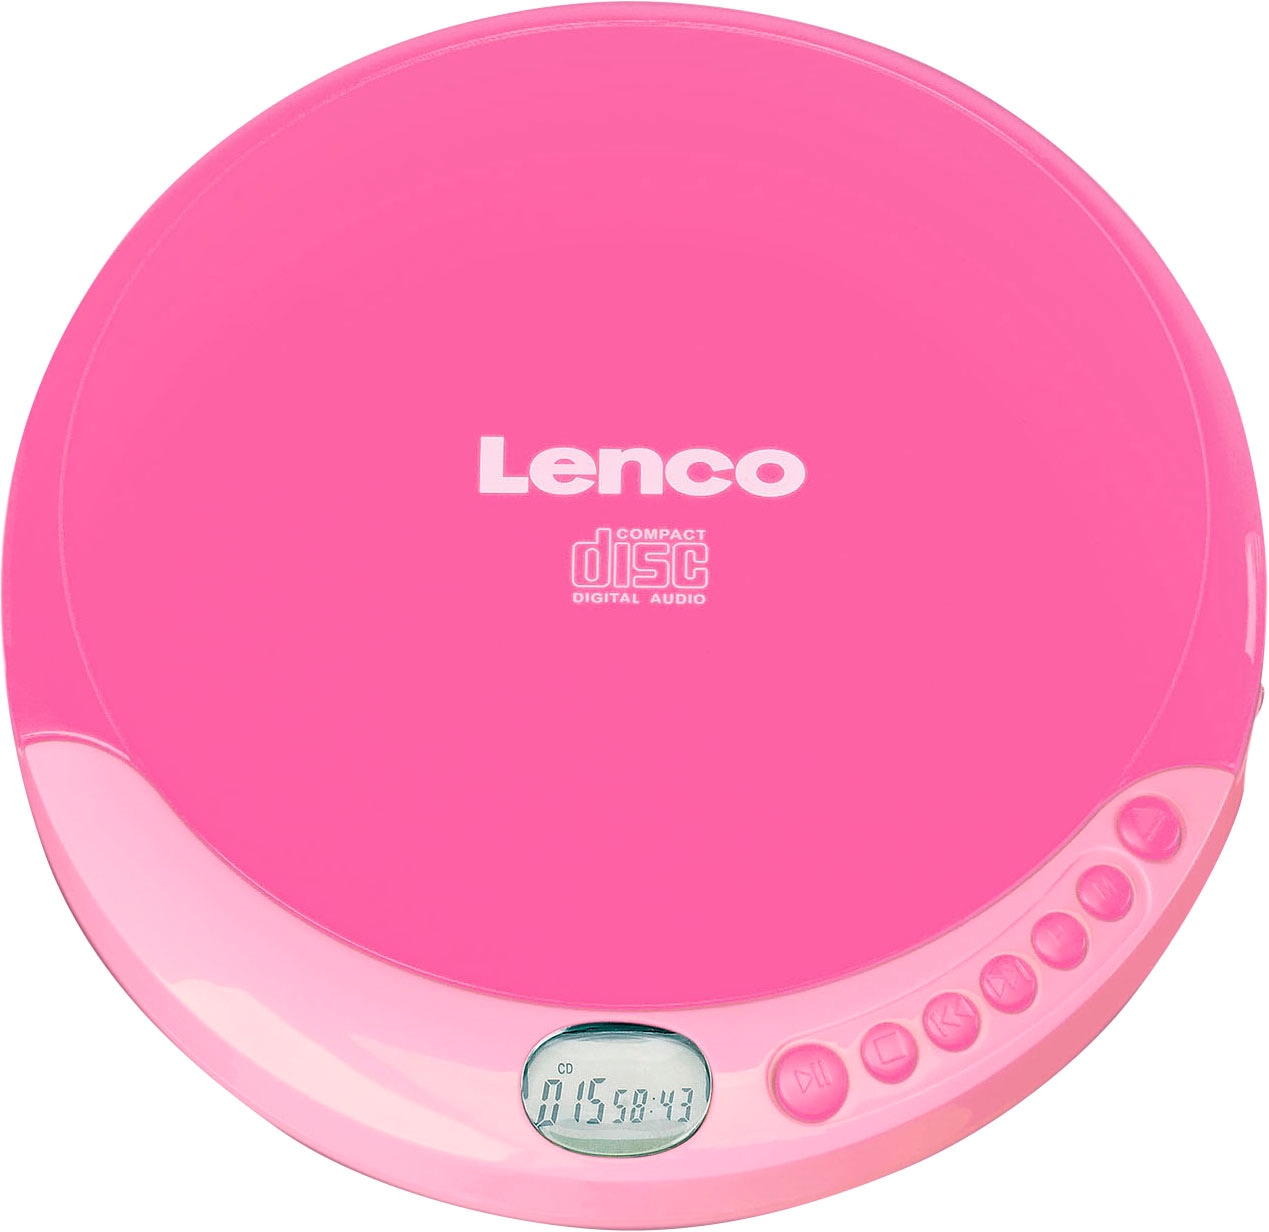 bei »CD-011« OTTO CD-Player Lenco jetzt kaufen